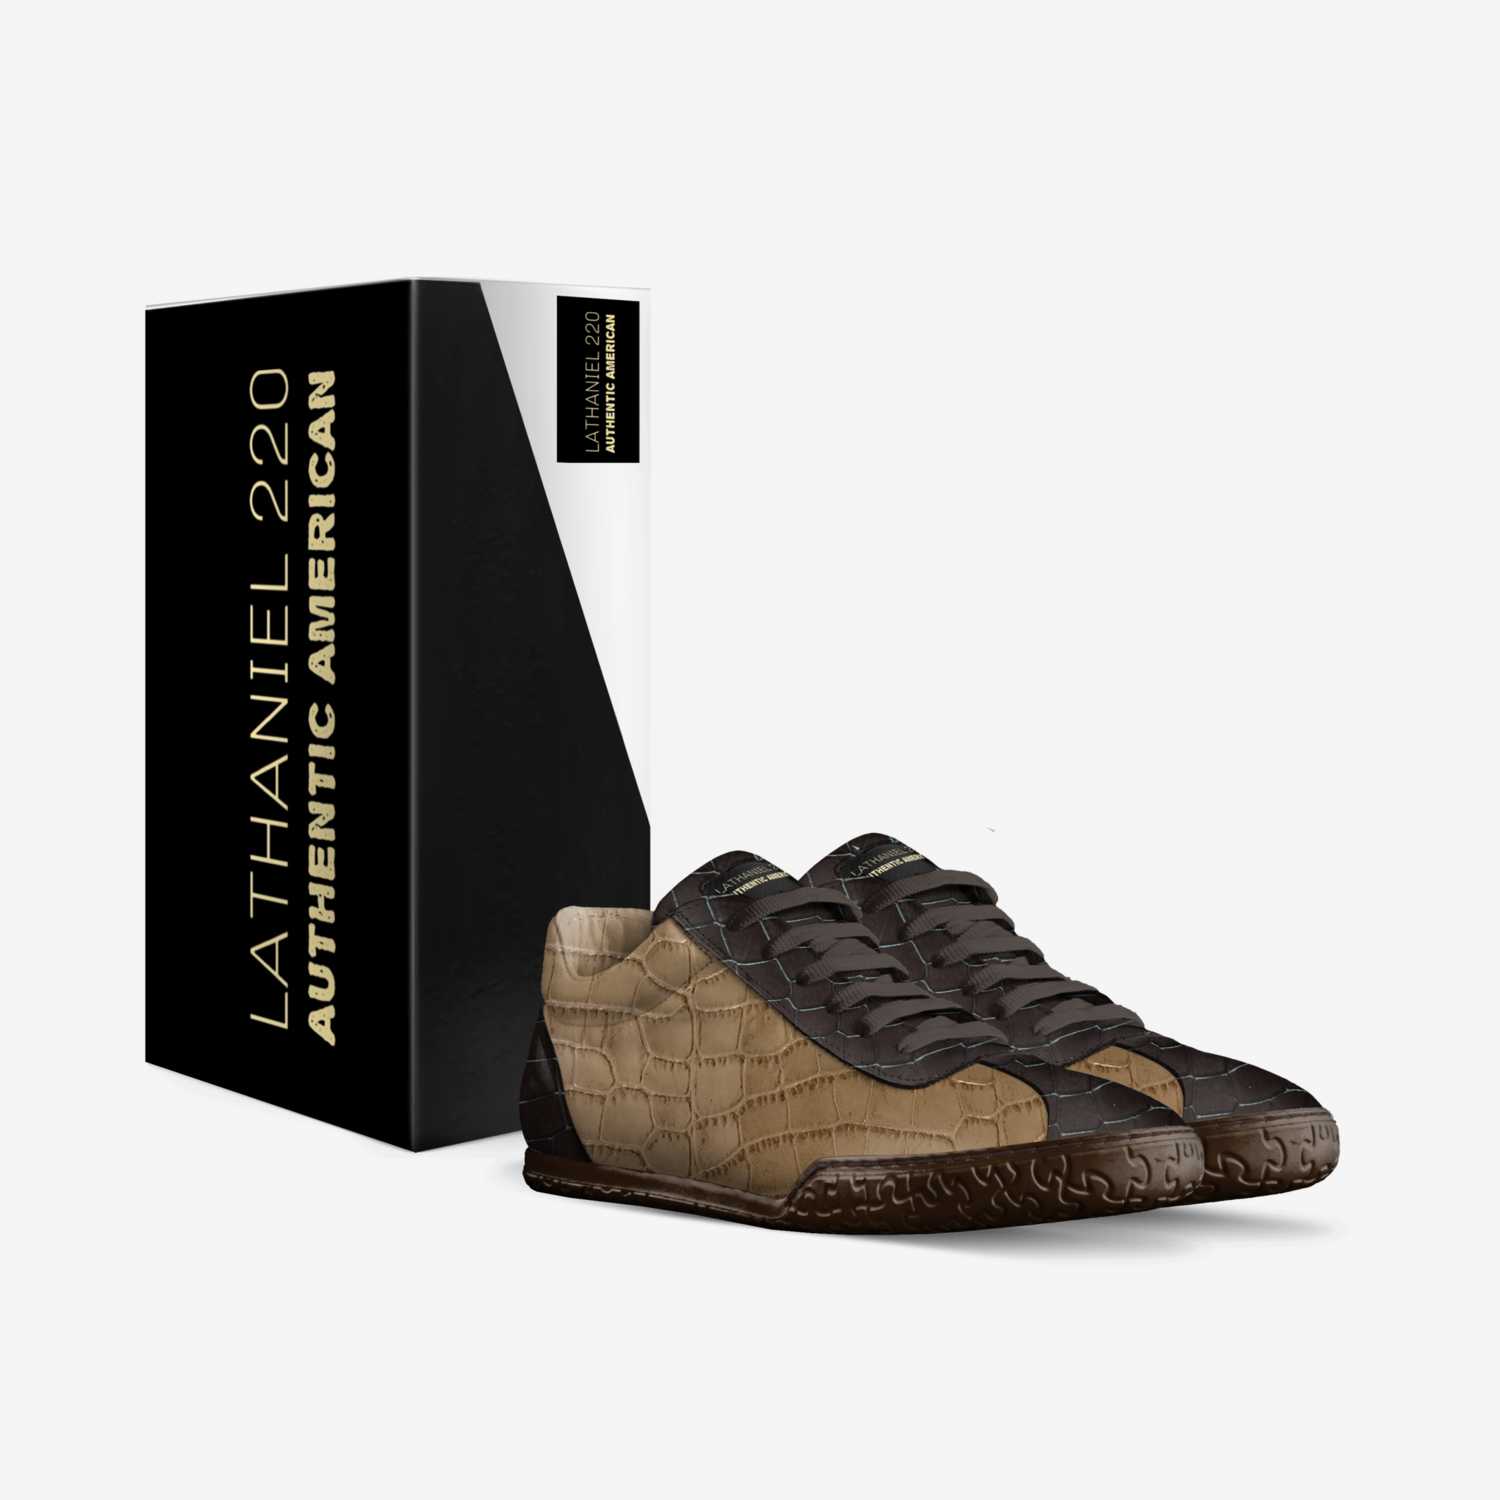 LATHANIEL 220 custom made in Italy shoes by John Steward | Box view